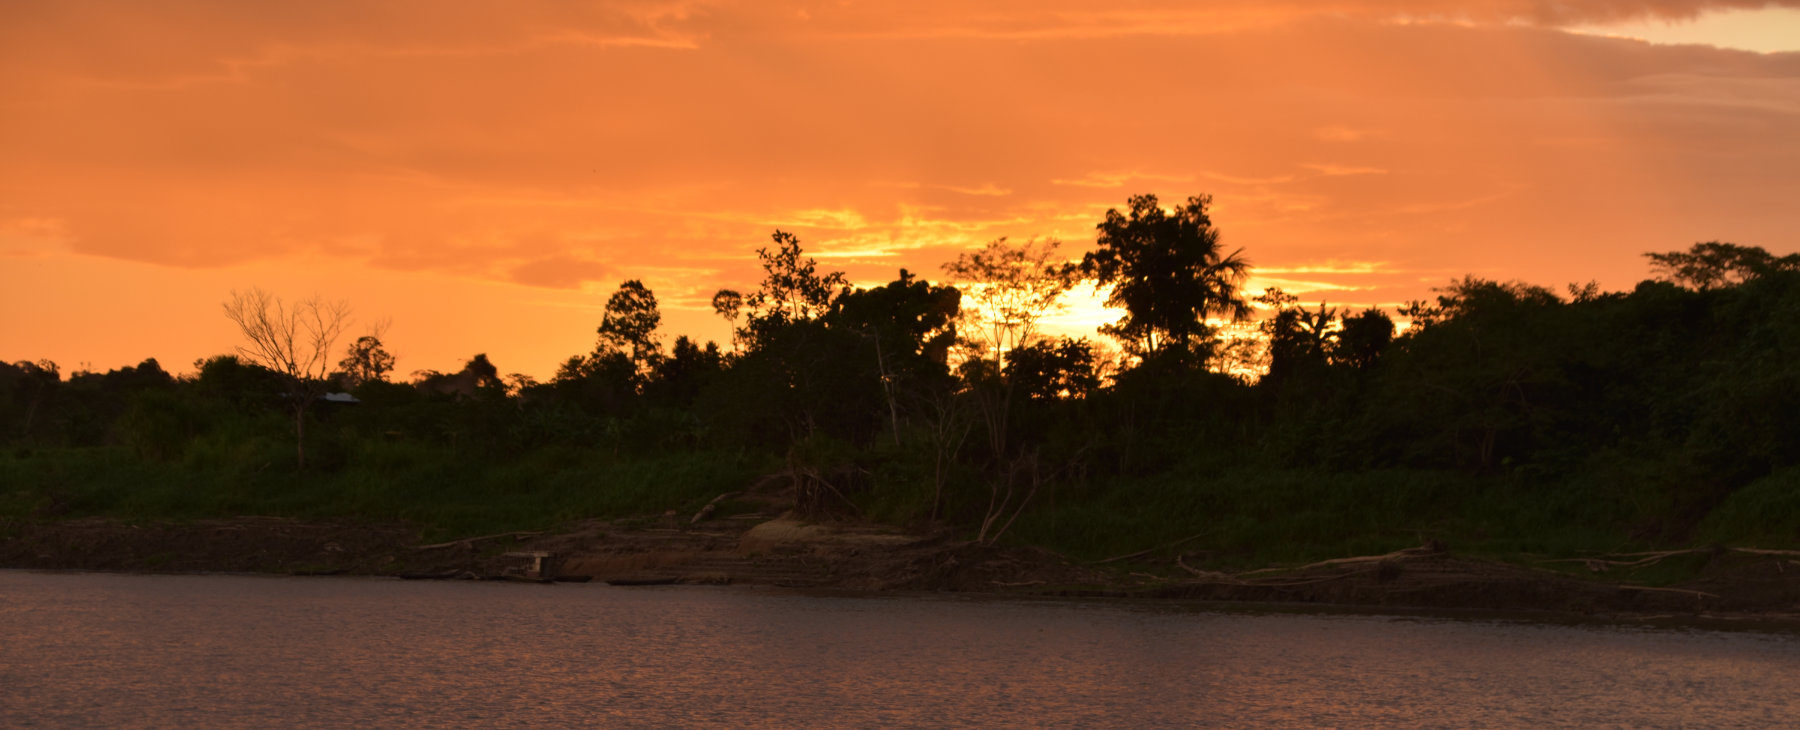 Luxuskreuzfahrt Amazonas Aria Amazon_Aqua Nera 4